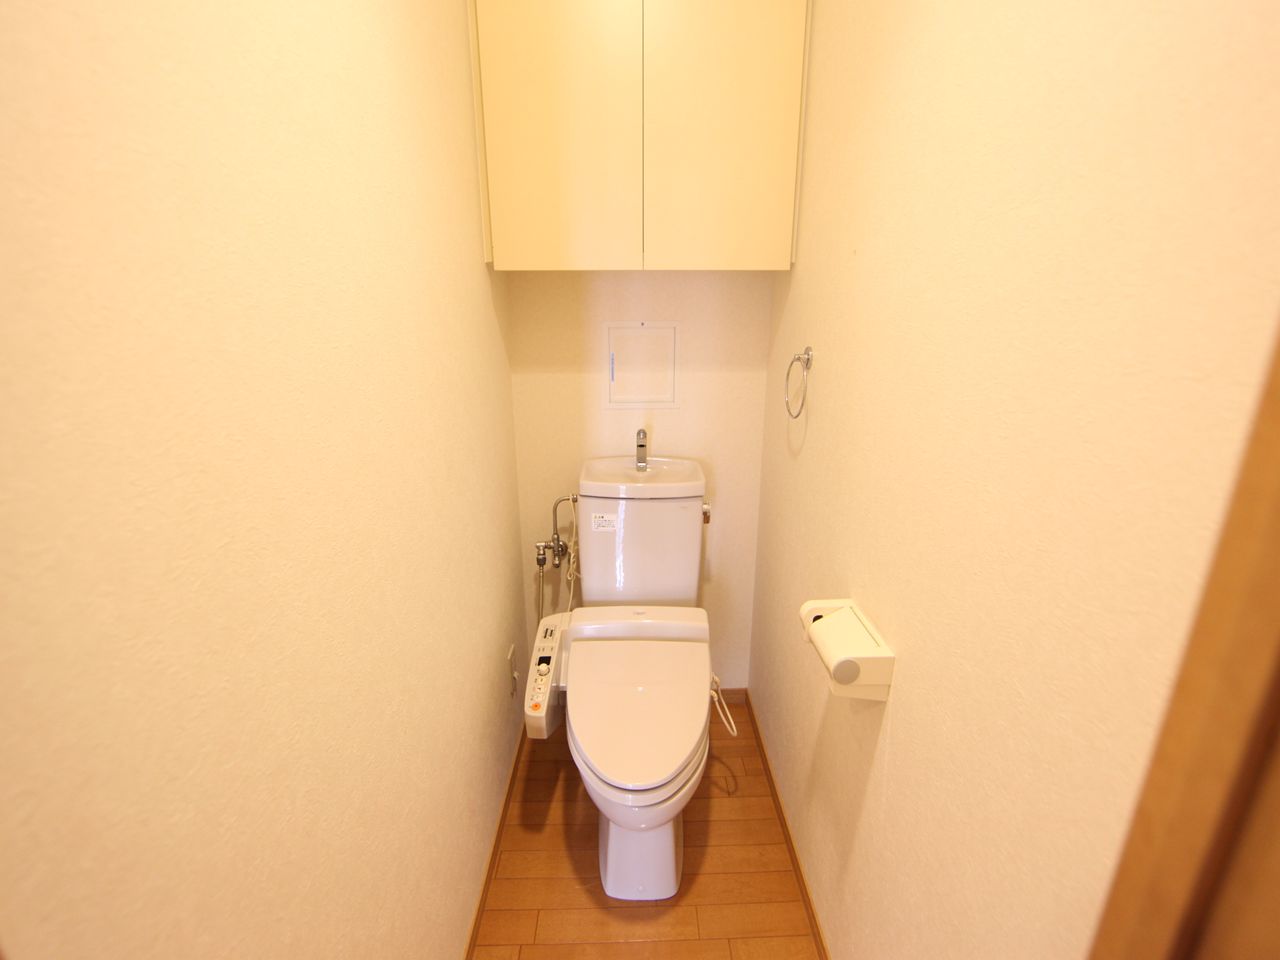 Toilet. toilet bus ・ Restroom Warm water washing heating toilet seat